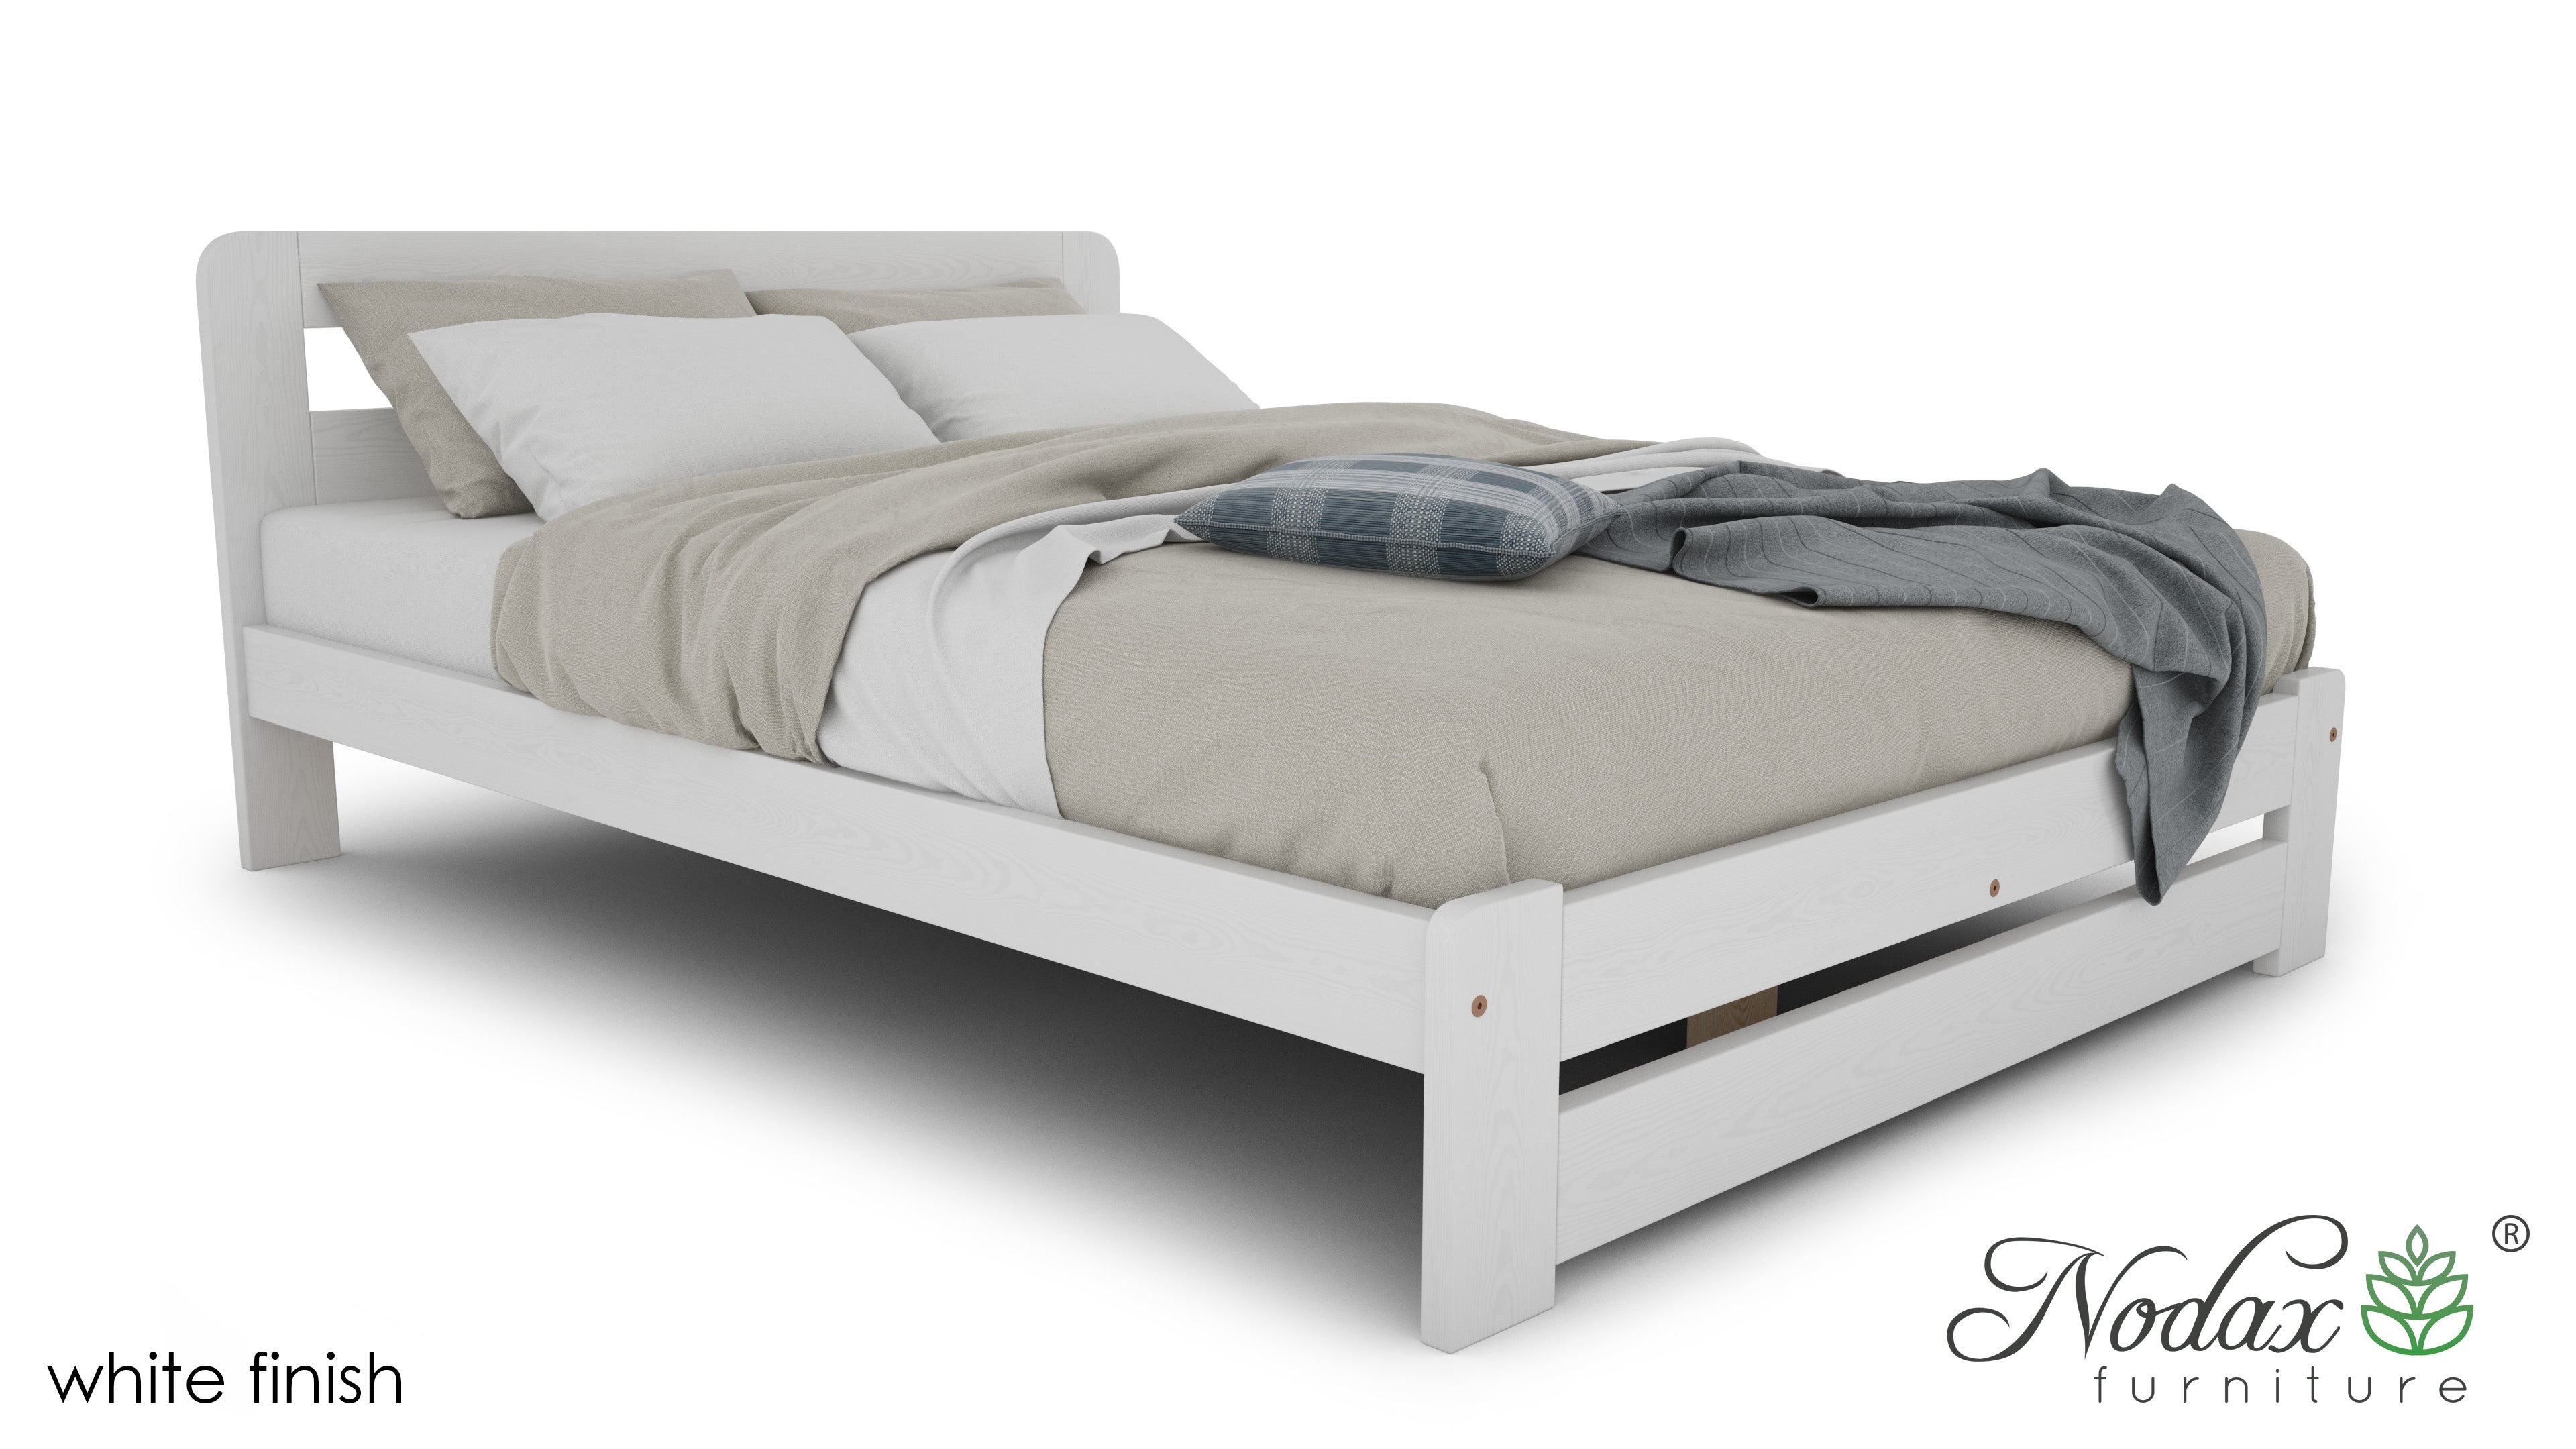 Wooden-bed-frame-Aurora-beds-online-white